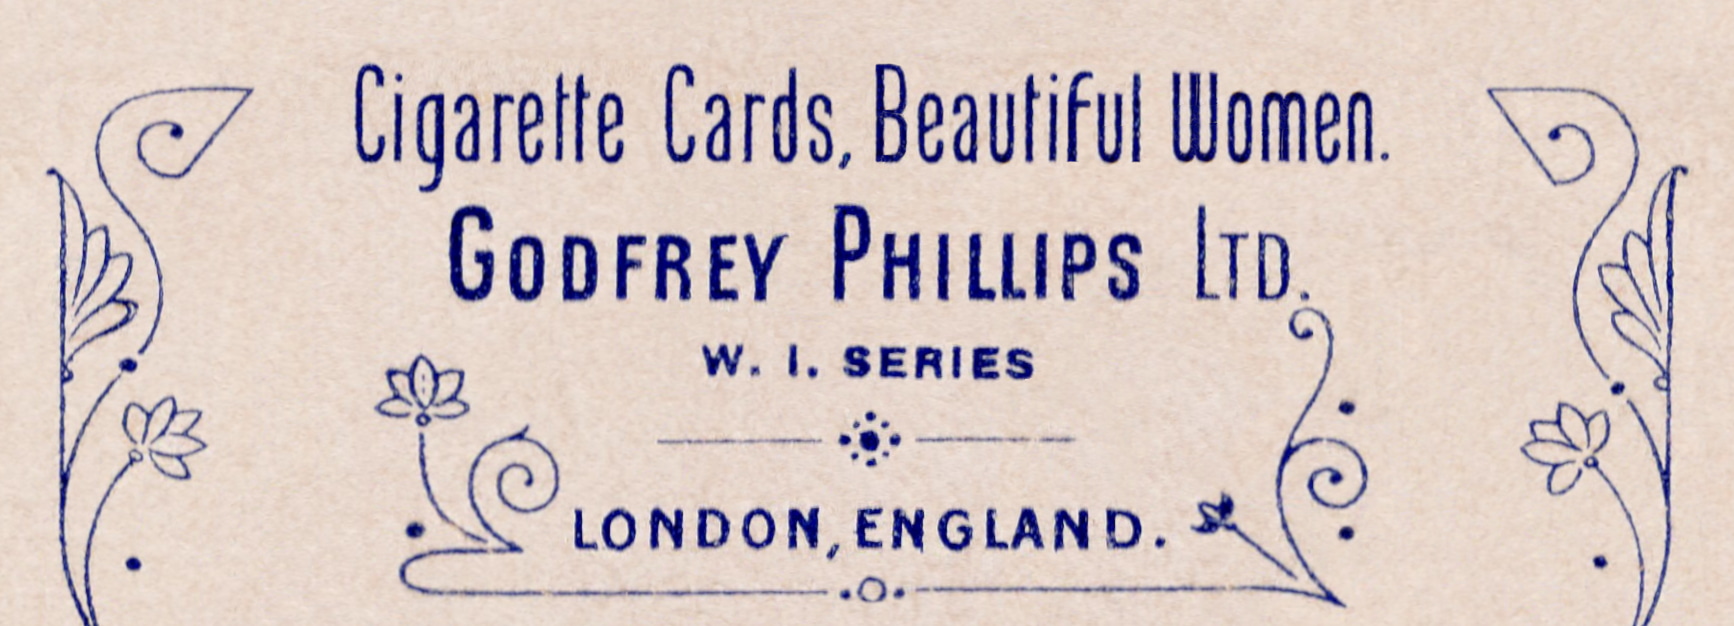 Title banner, Godfrey Phillips Ltd. cigarette cards, Beautiful Women, W. I. Series.